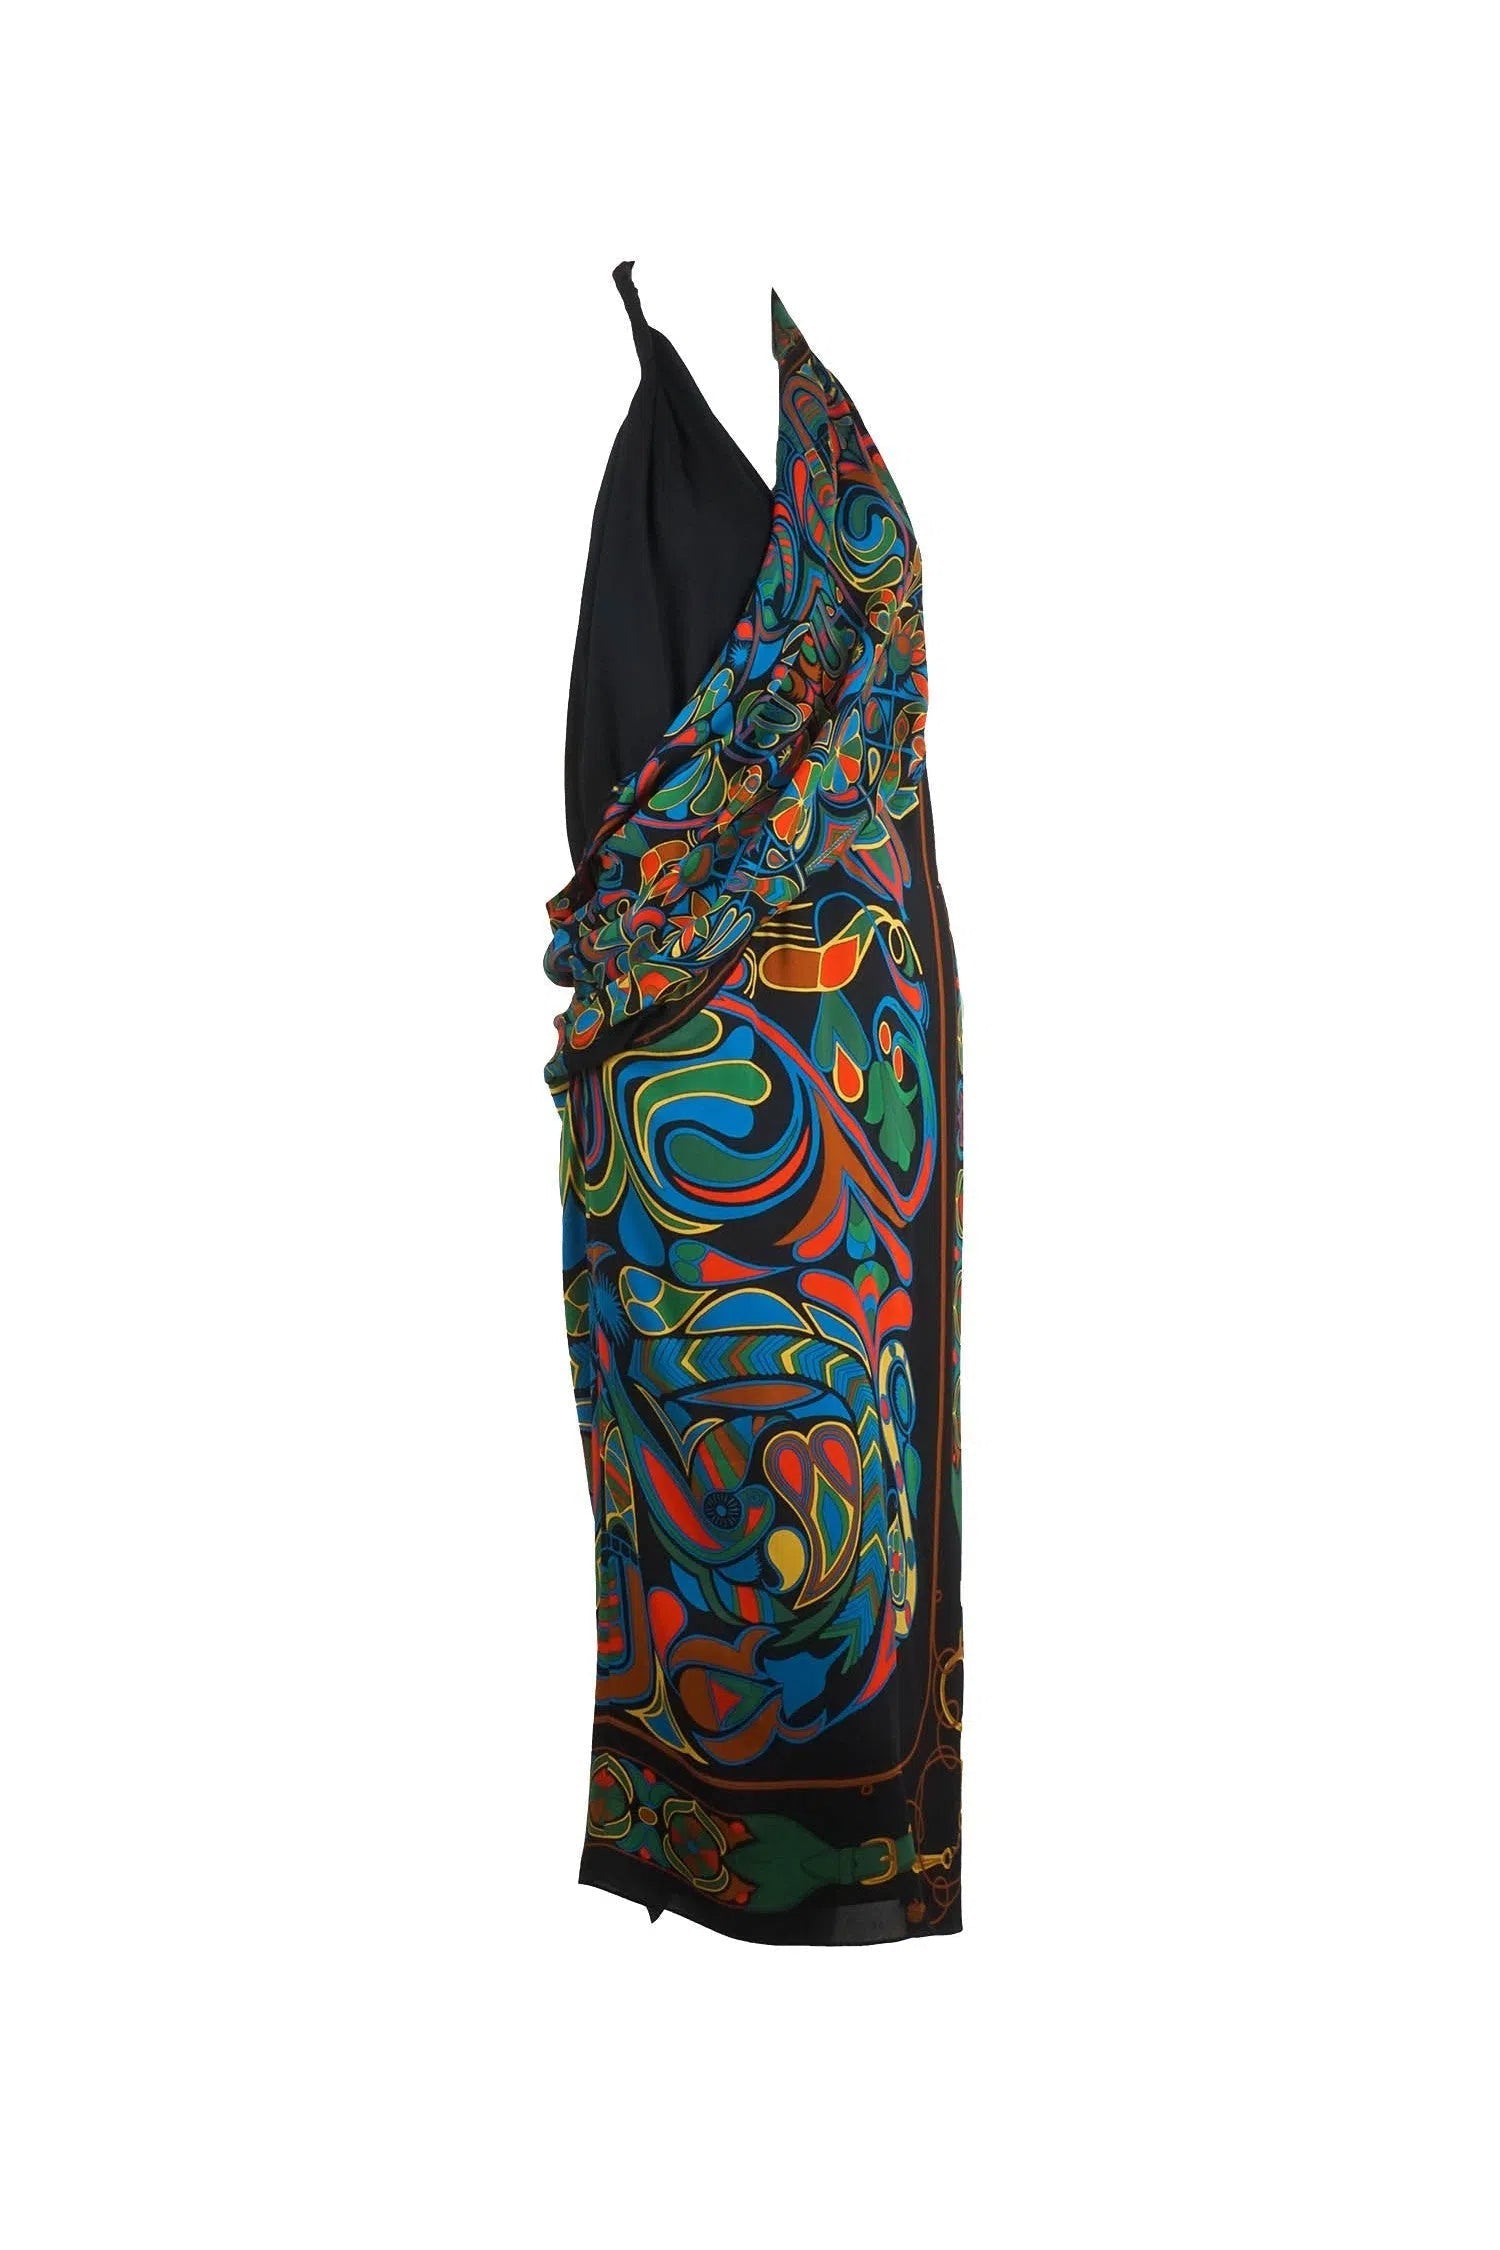 Hermès Vintage Multicolored Silk Scarf Halter Dress 1990's